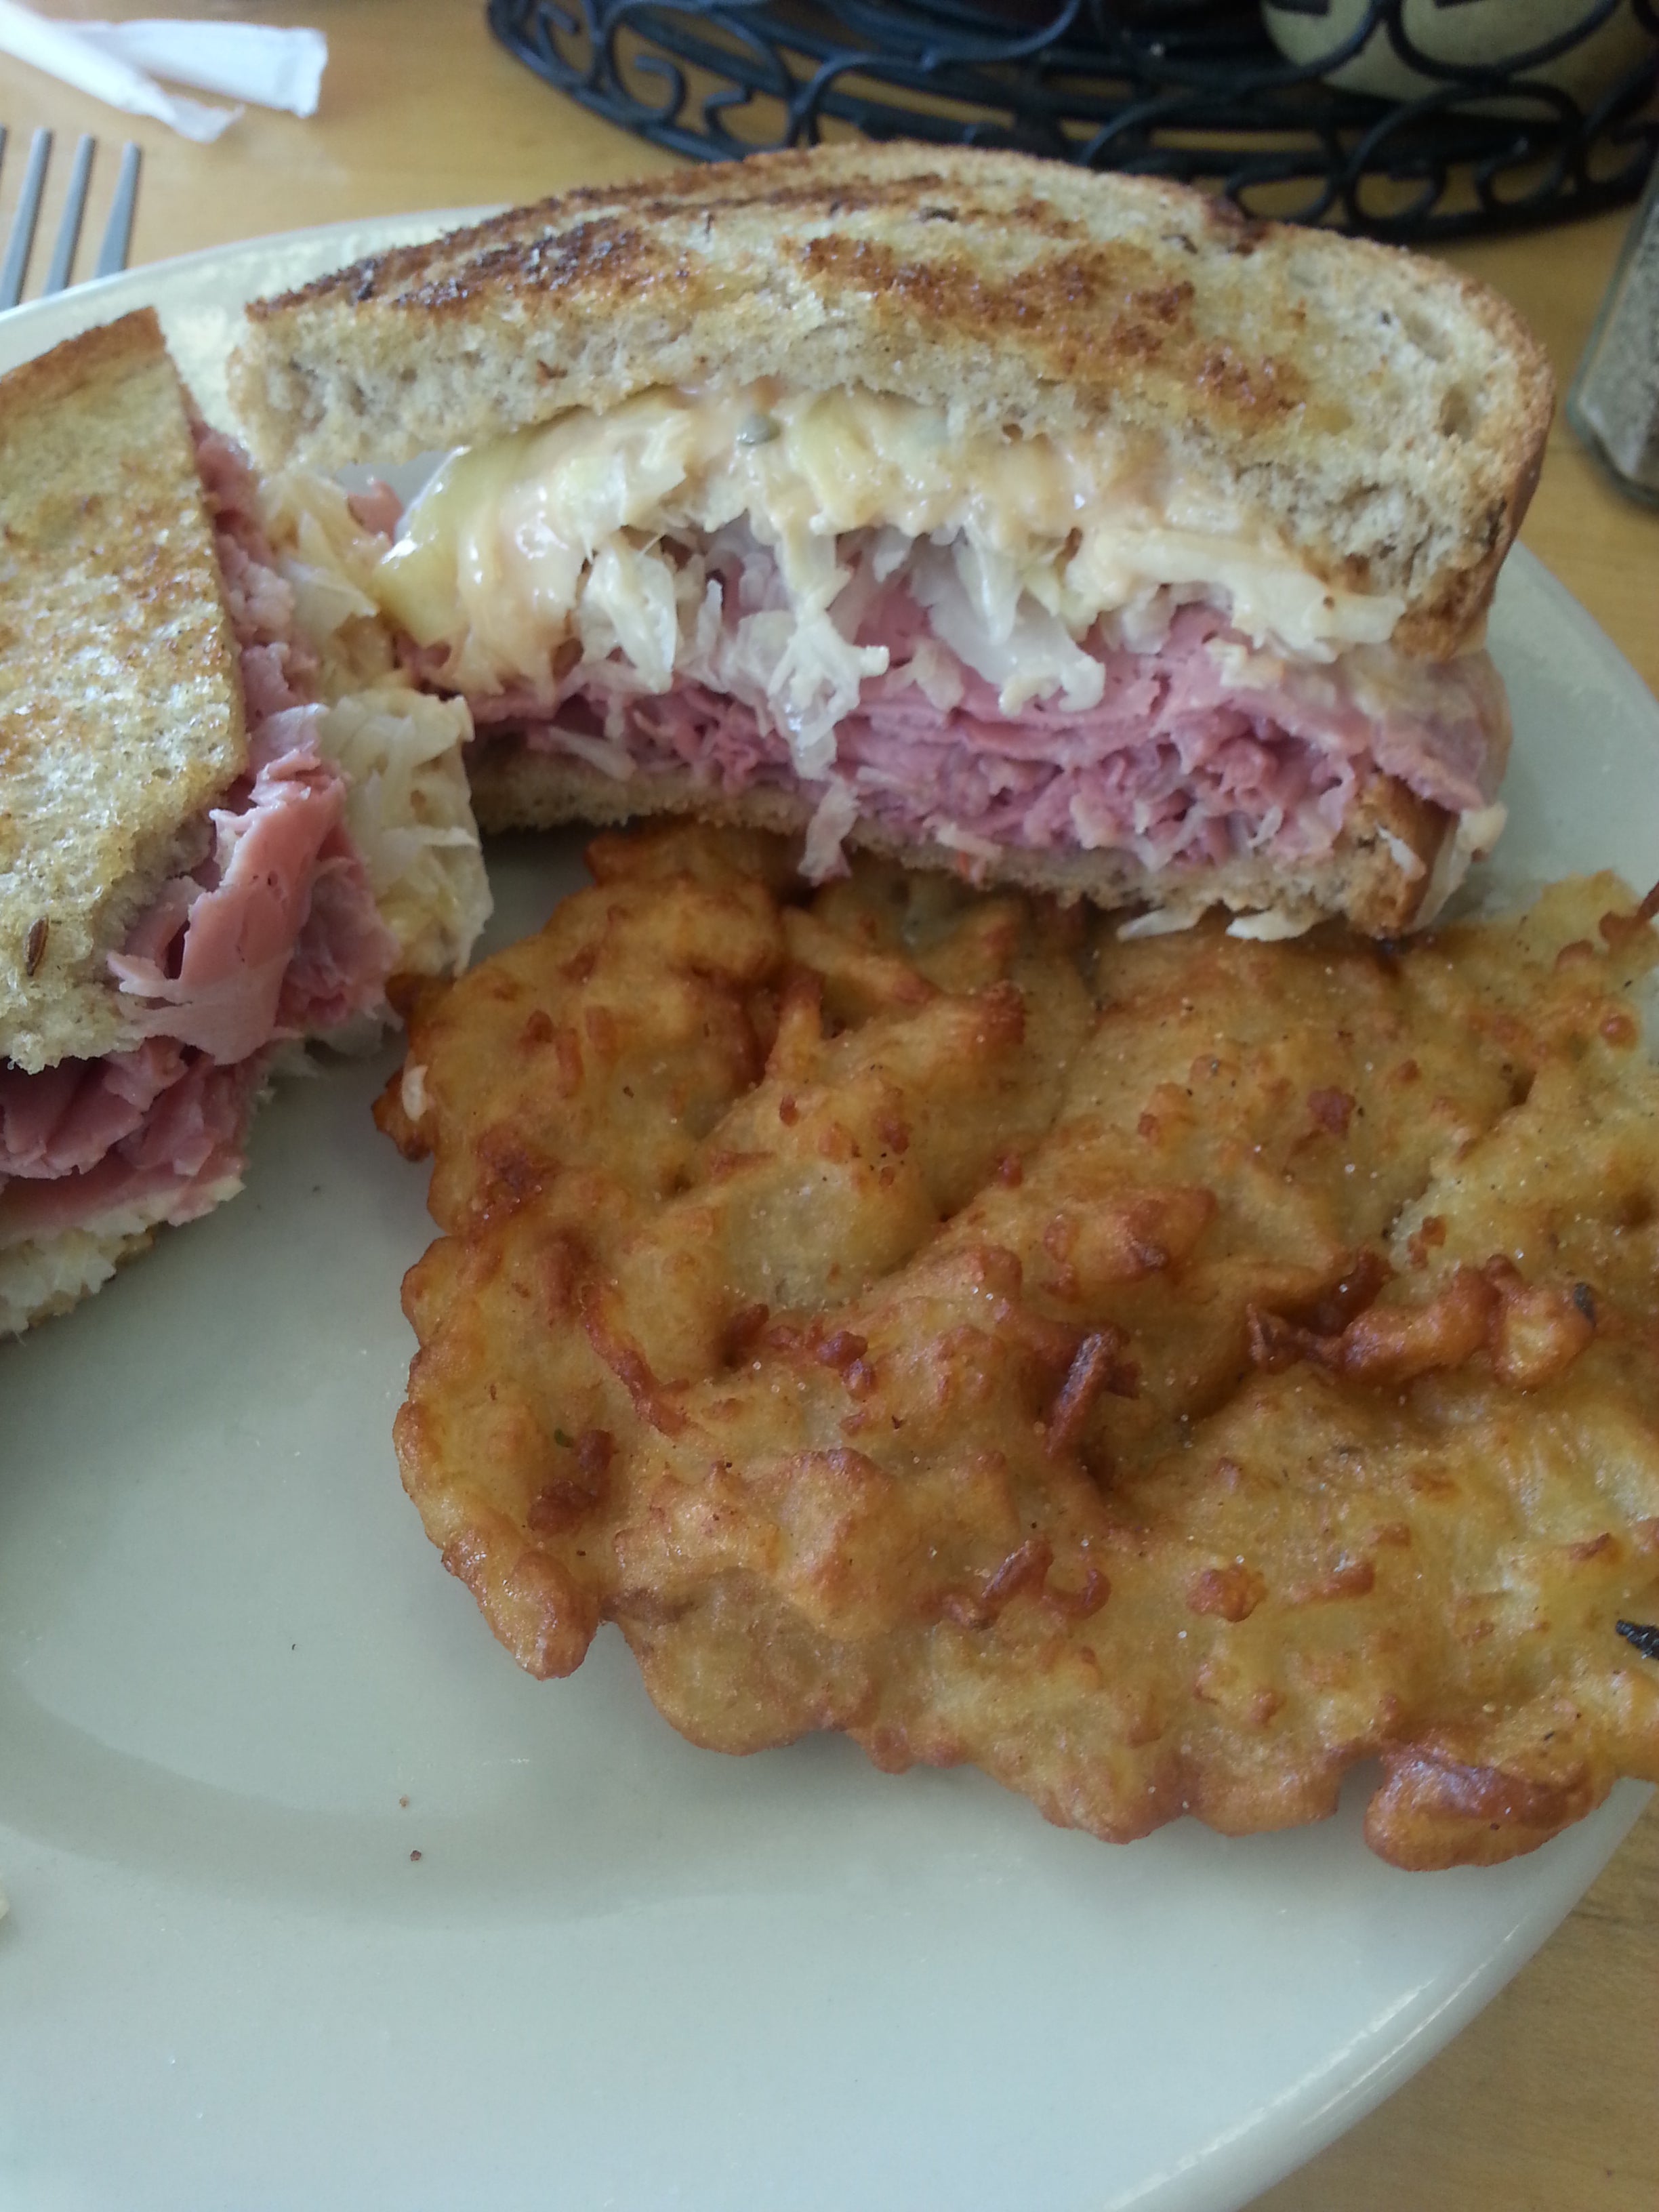 Izzy's corned beef sandwich and potato pancake.